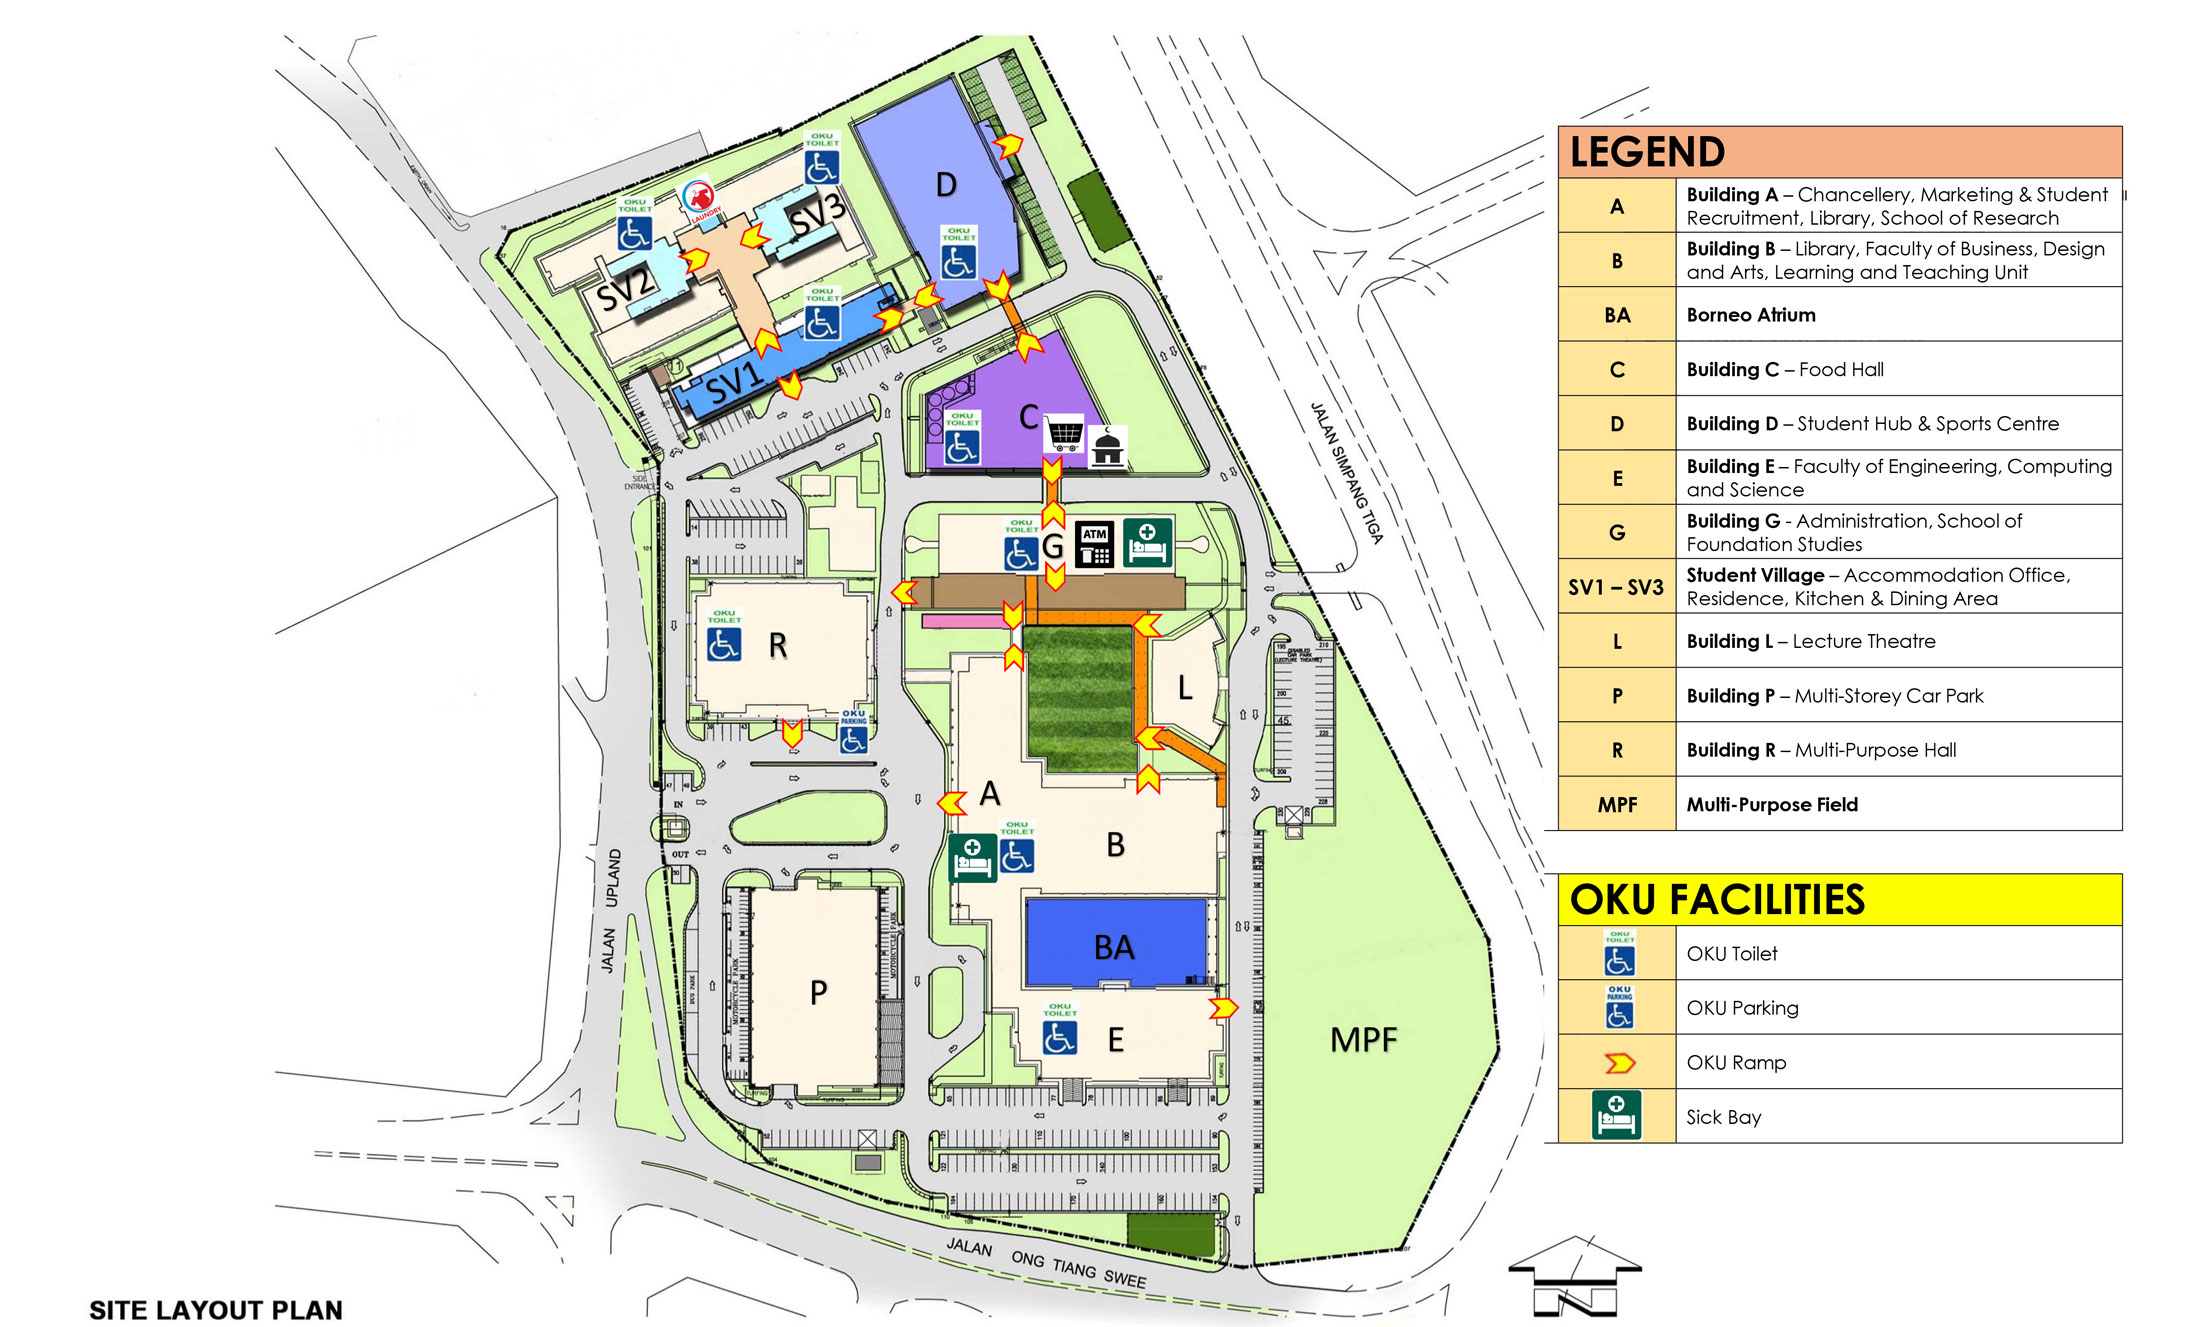 Site layout plan of Swinburne's Sarawak campus.